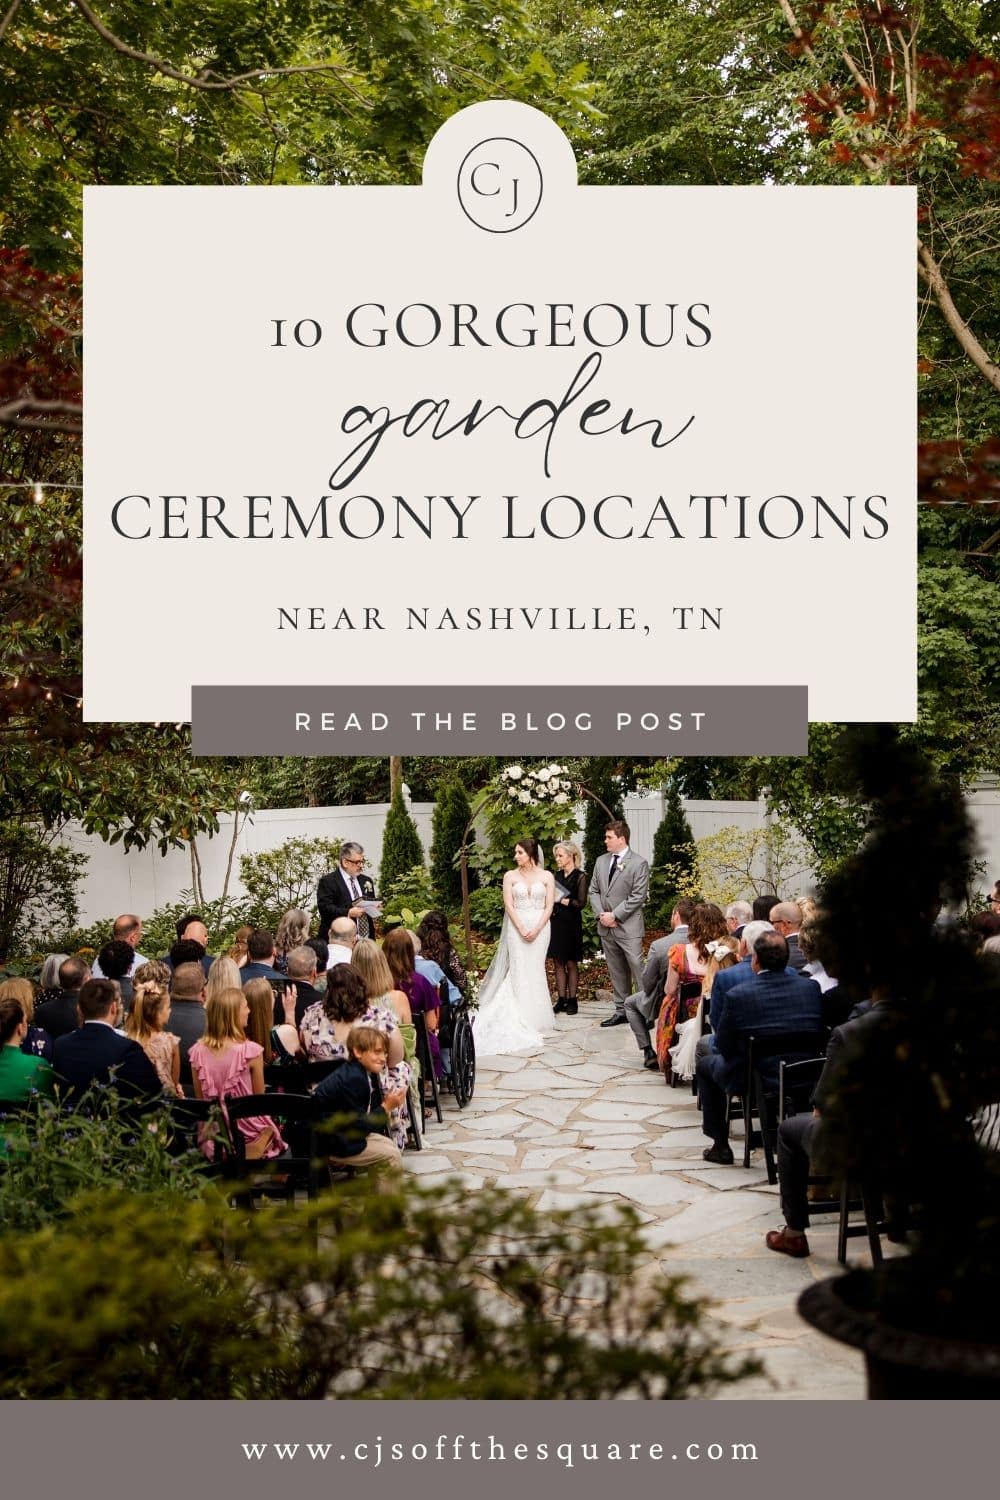 10 gorgeous garden wedding ceremony locations near Nashville